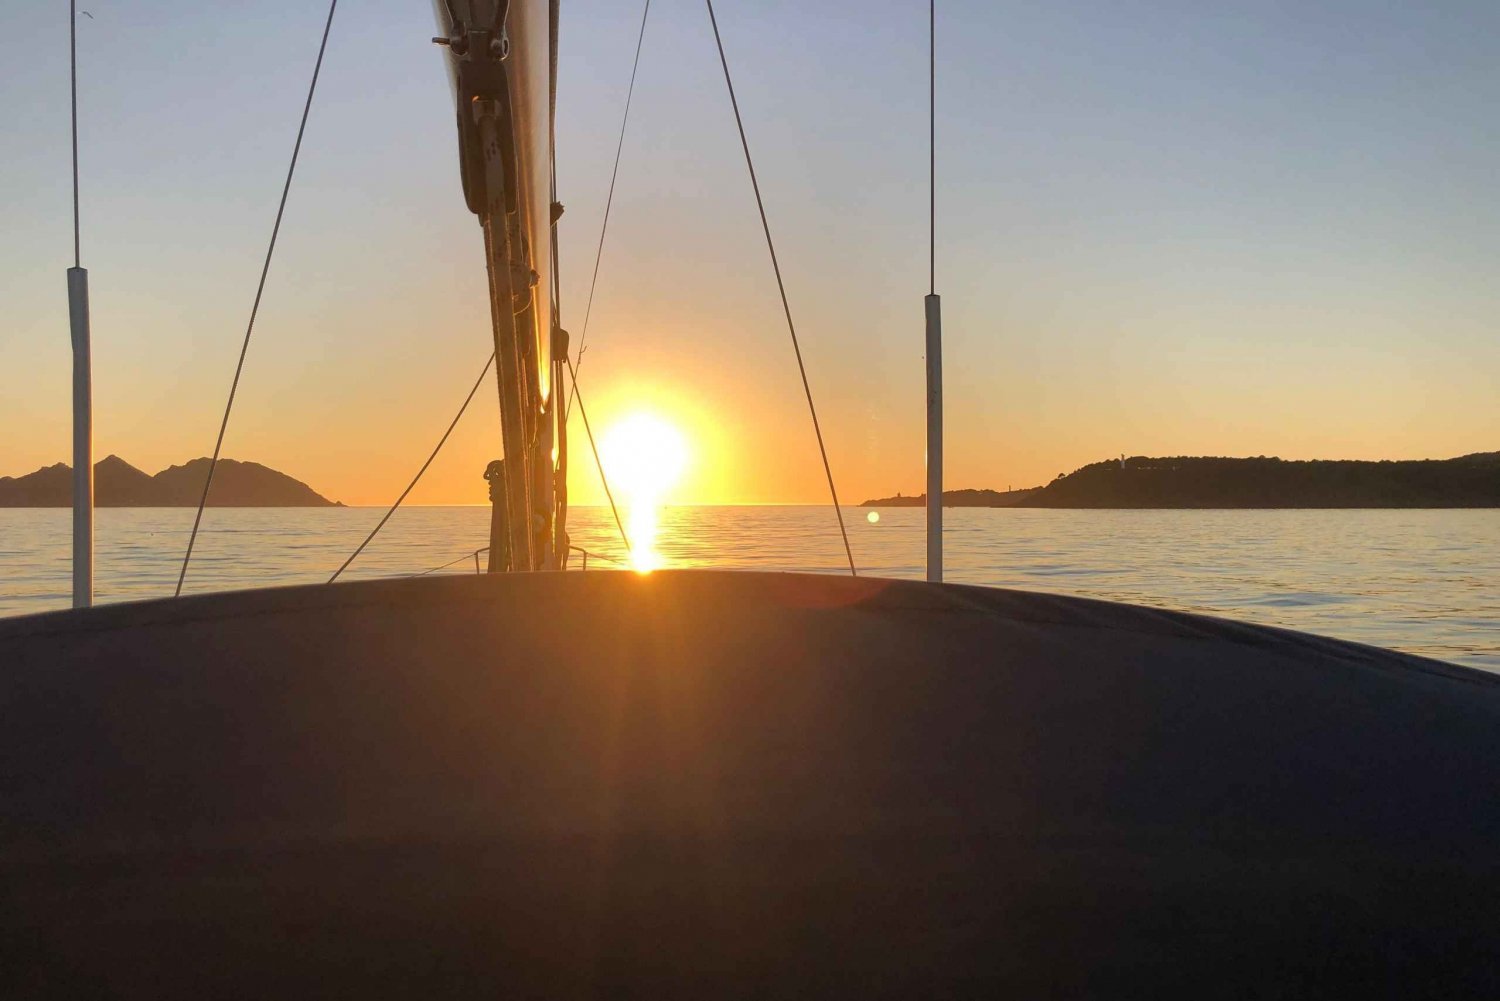 Solnedgang på en luksuriøs seilbåt - Lagos - Algarve